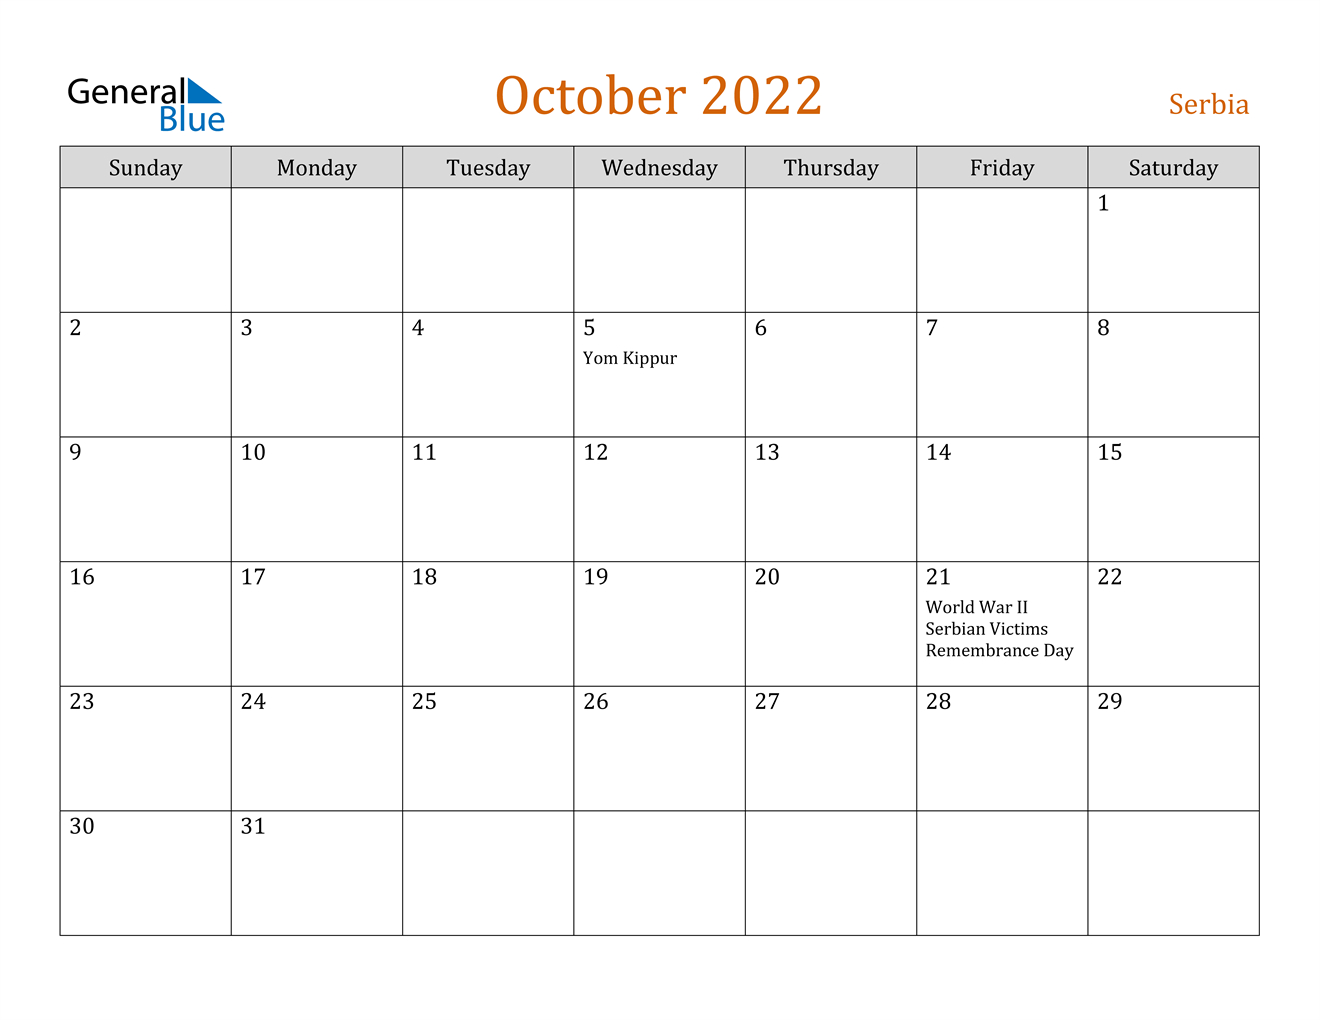 Collect October 2022 Holiday Calendar